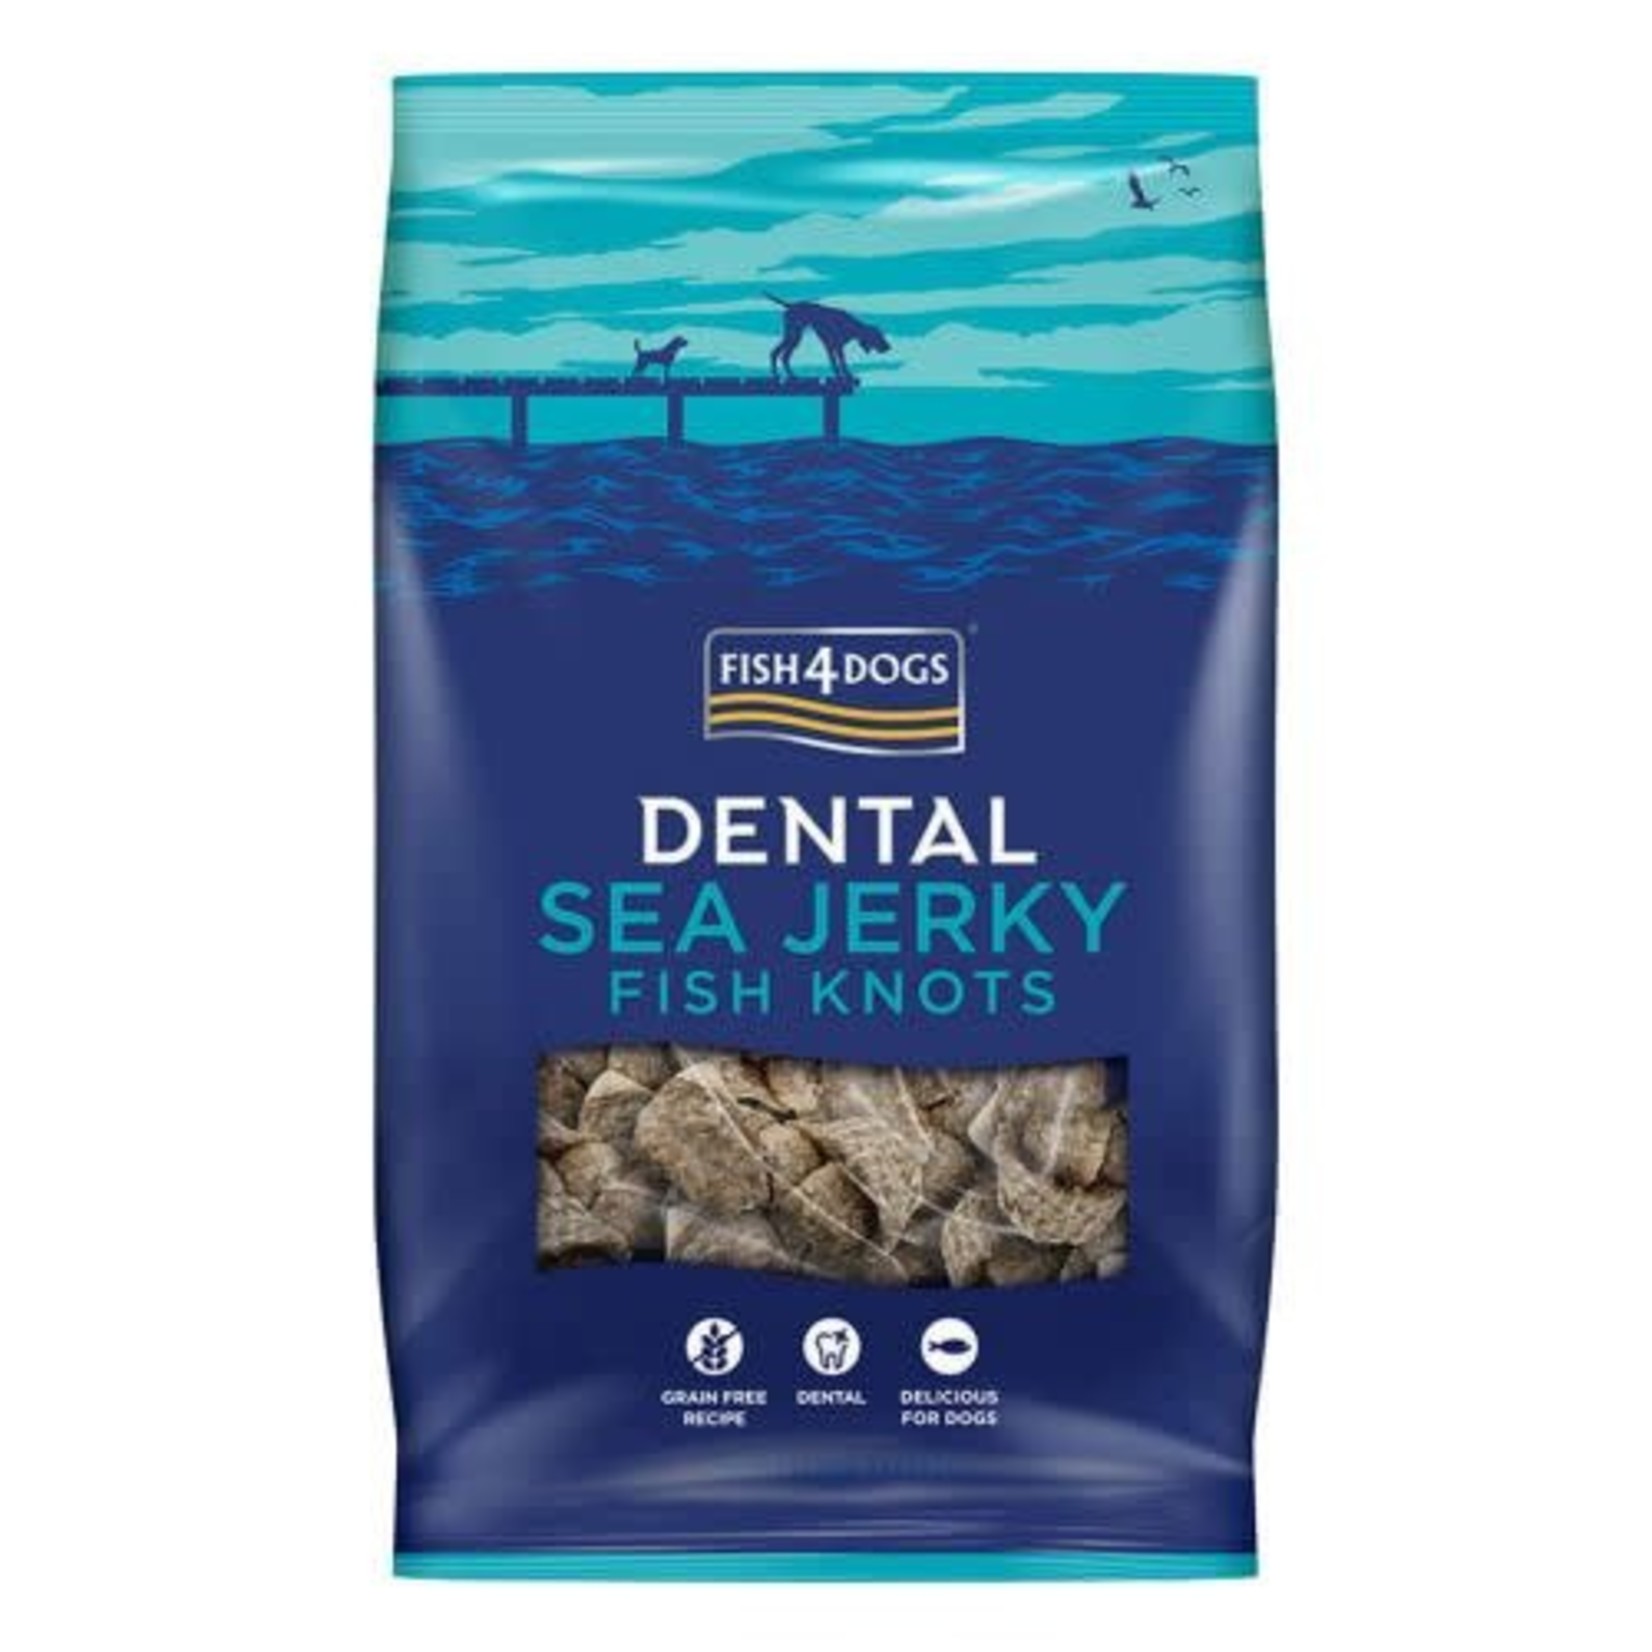 Fish4Dogs Dental Sea Jerky Fish Knots Dog Chews, 500g